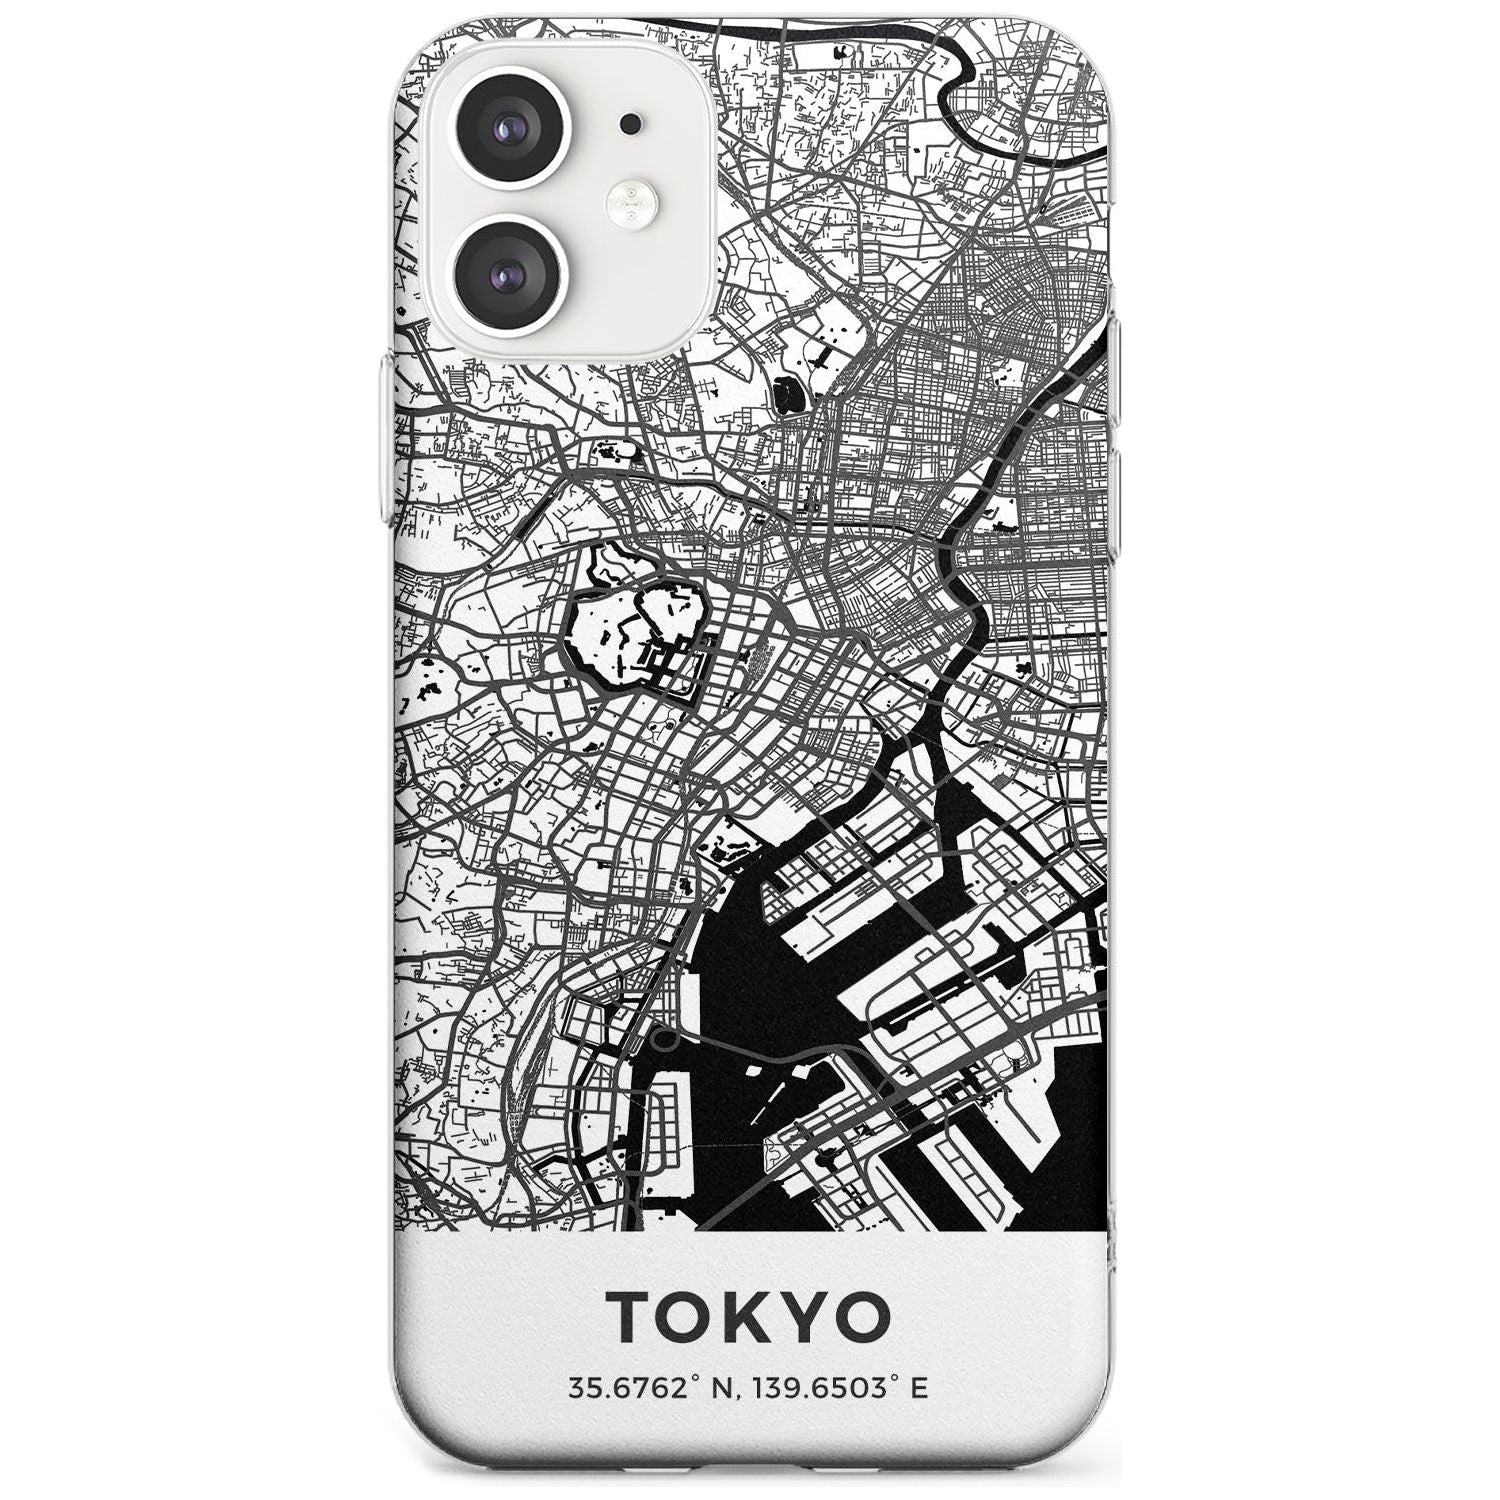 Map of Tokyo, Japan Slim TPU Phone Case for iPhone 11